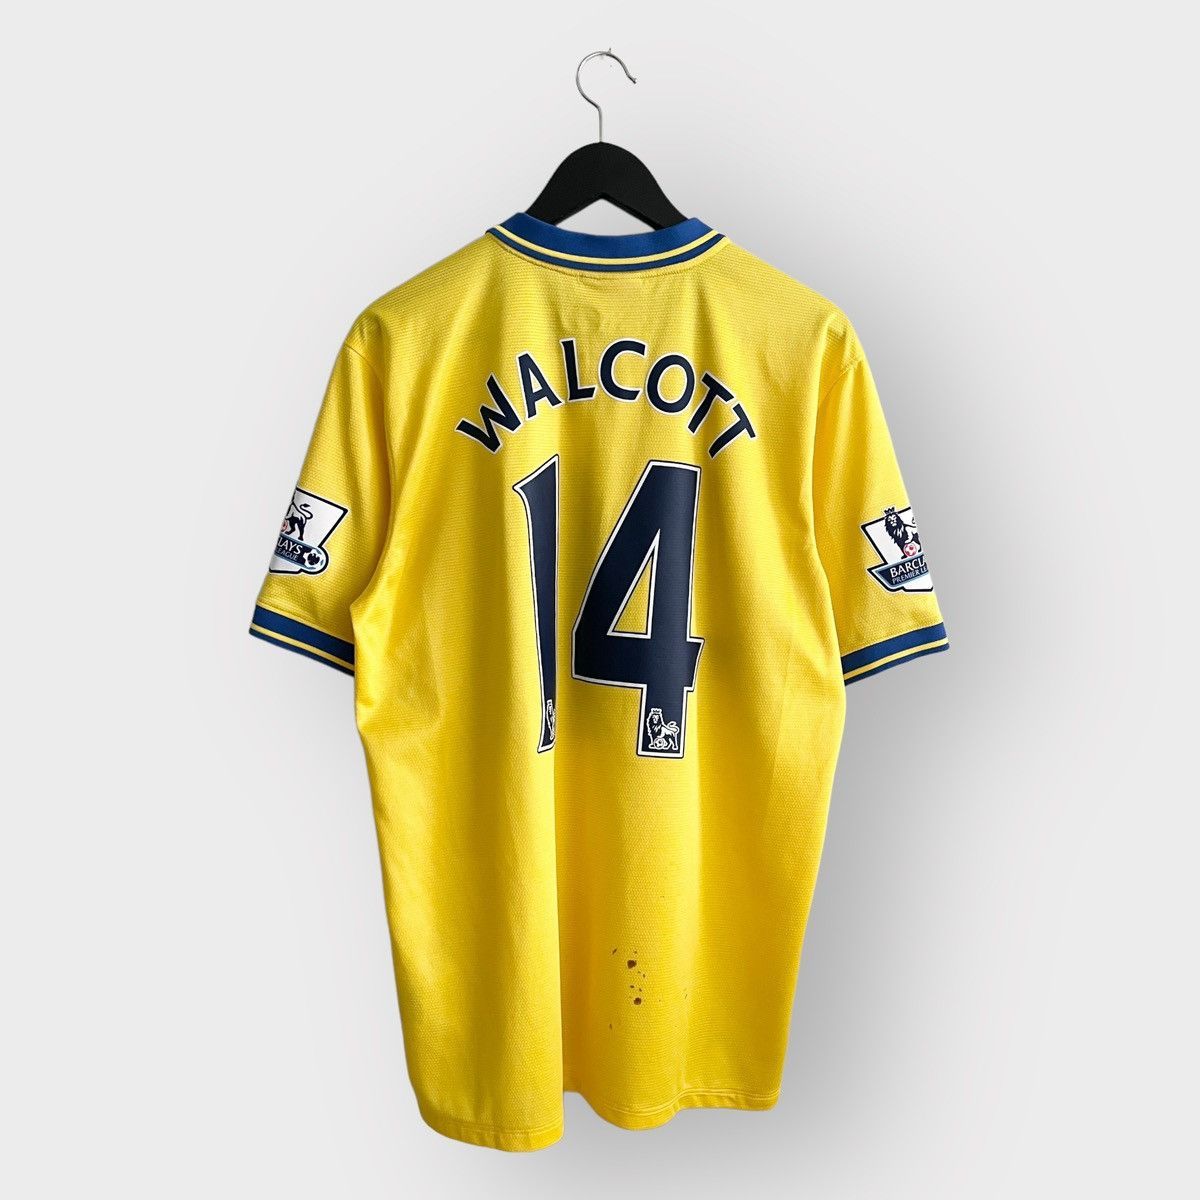 Vintage 2013-14 Arsenal Away Jersey #14 Walcott (L) - 1